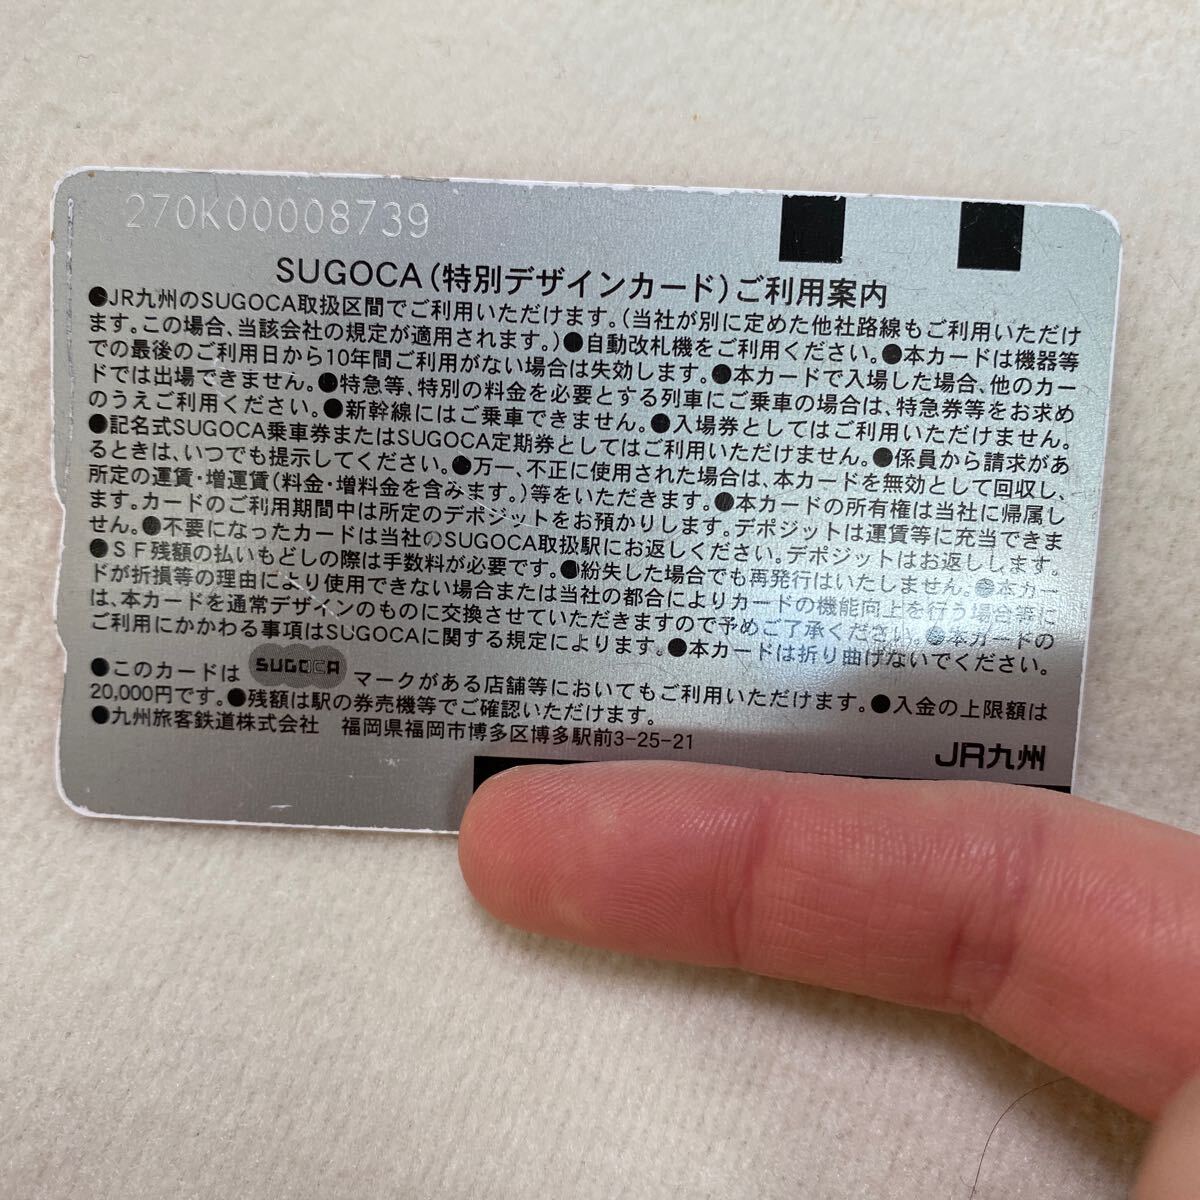 JRJR九州 SUGOCA 沖縄バージョン カエル 蛙 Suica PASMO 限定カード 限定デザイン_画像2